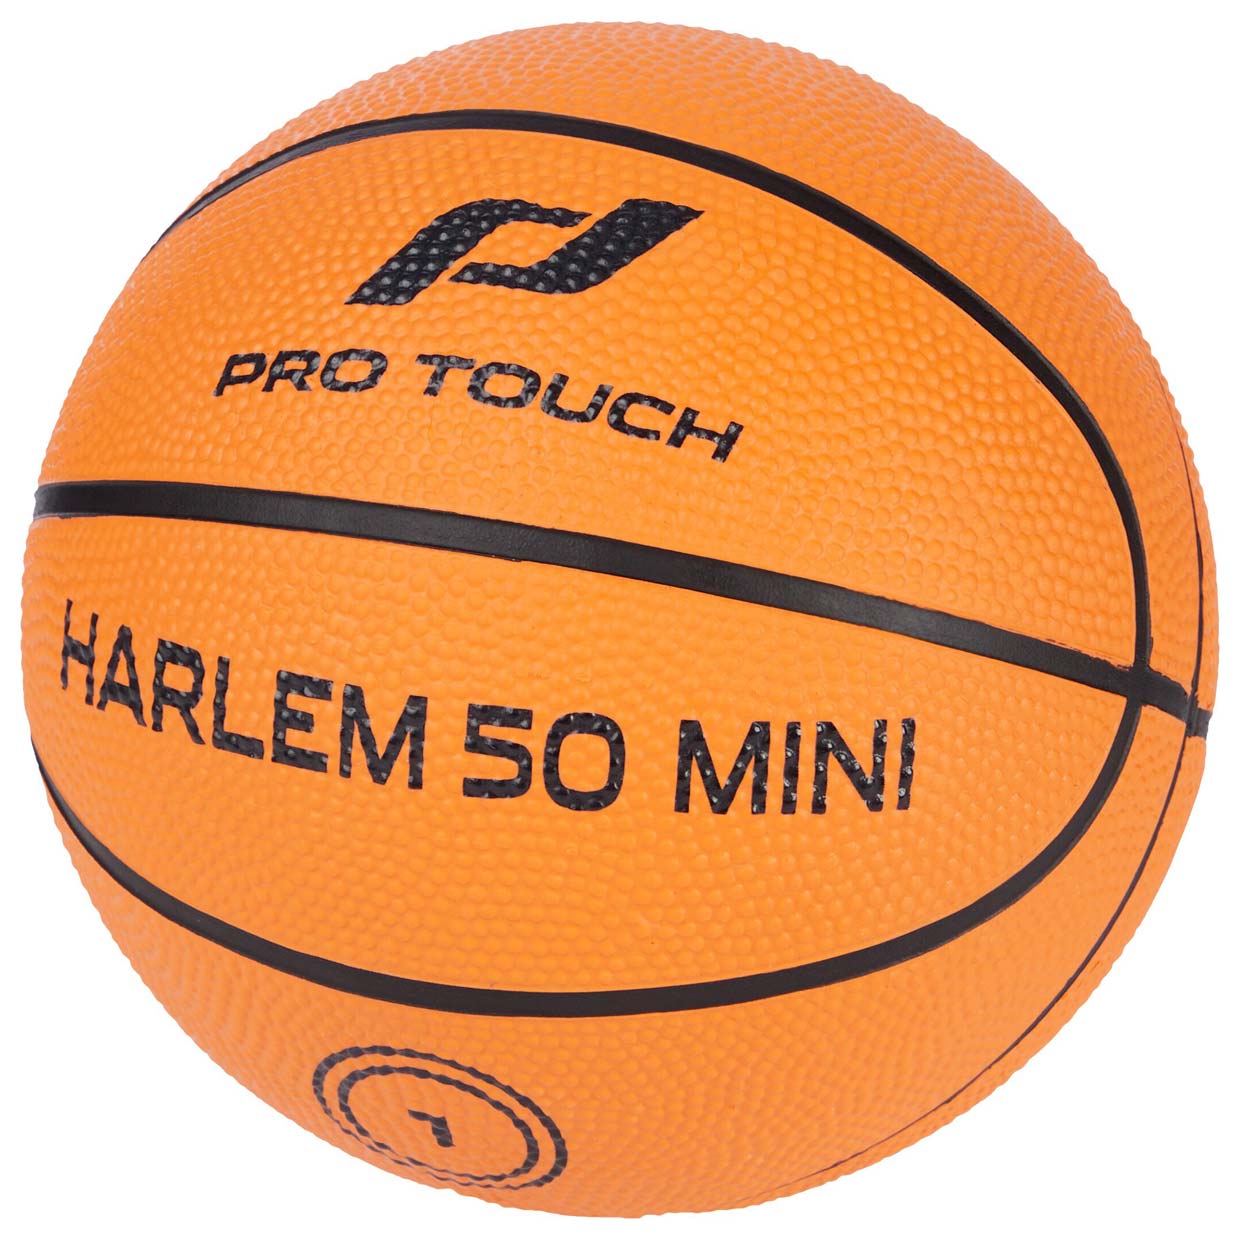 Mini-Ball Harlem 50